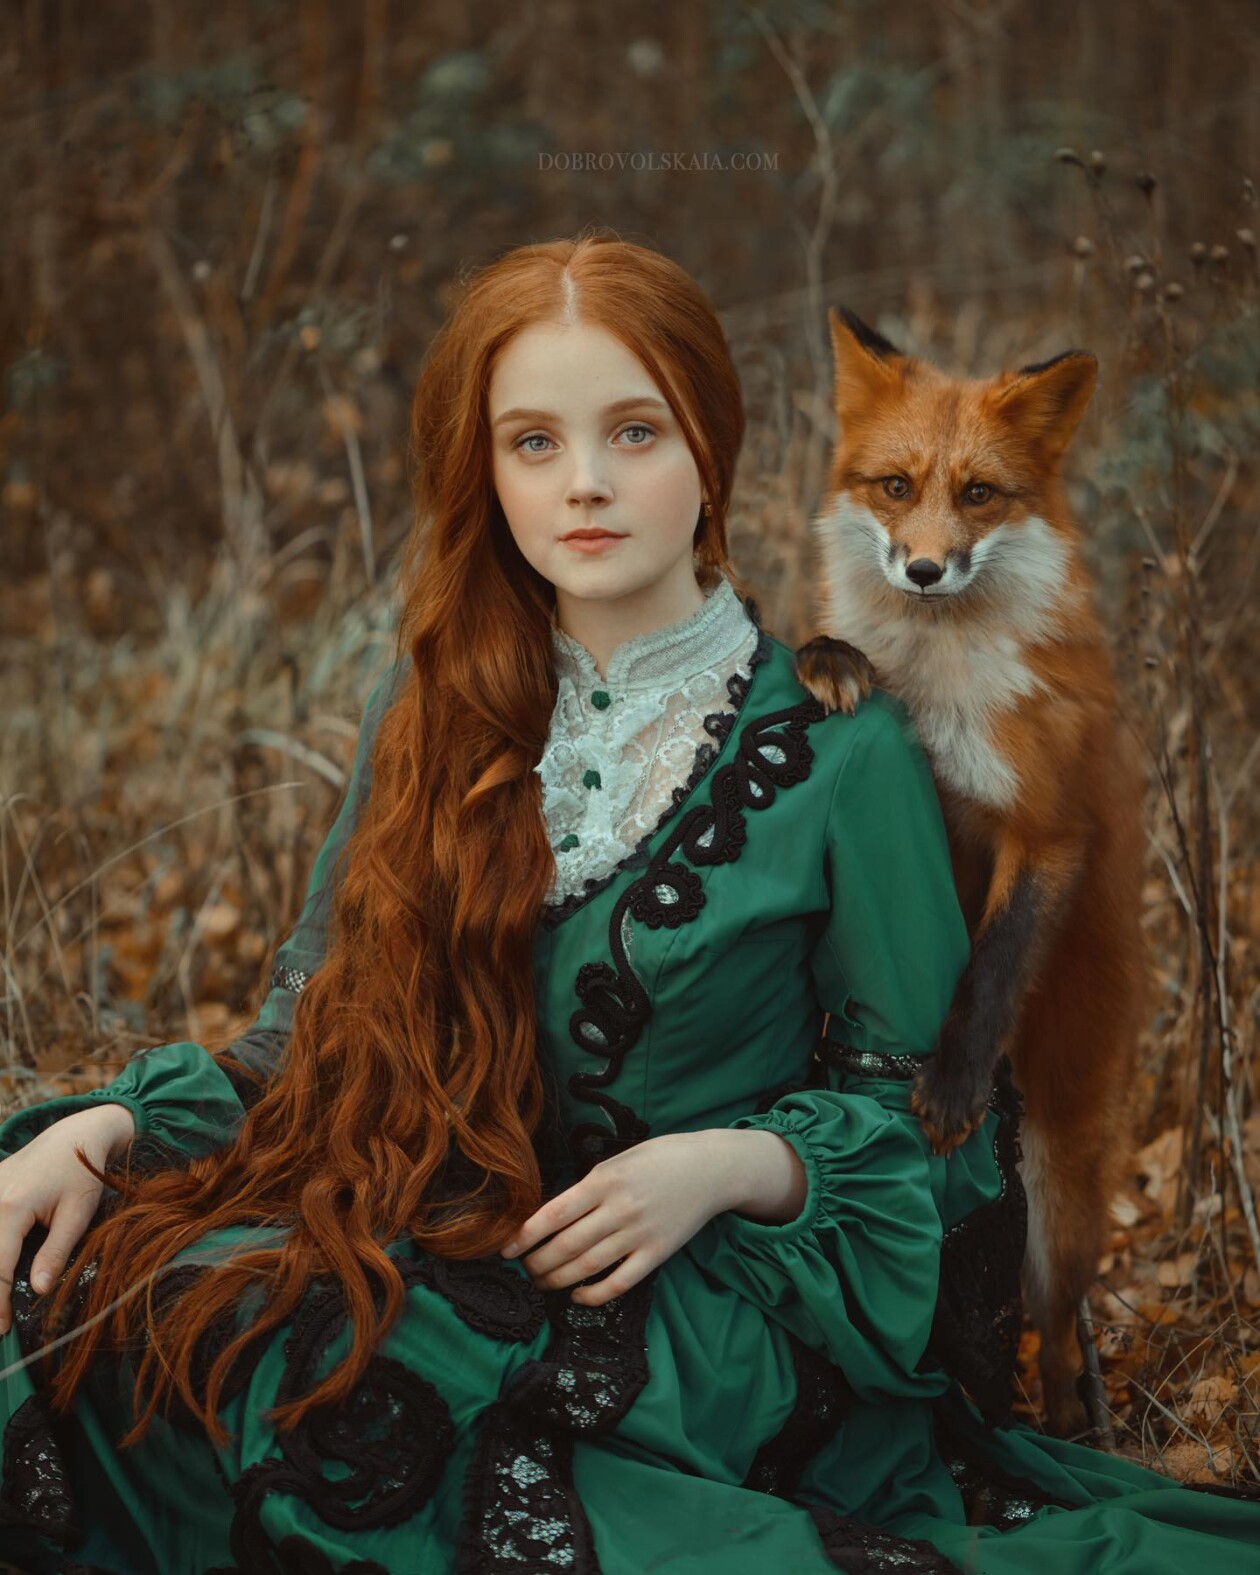 The Bond Between Humans And Animals In Anastasiya Dobrovolskaya's Portraits (1)